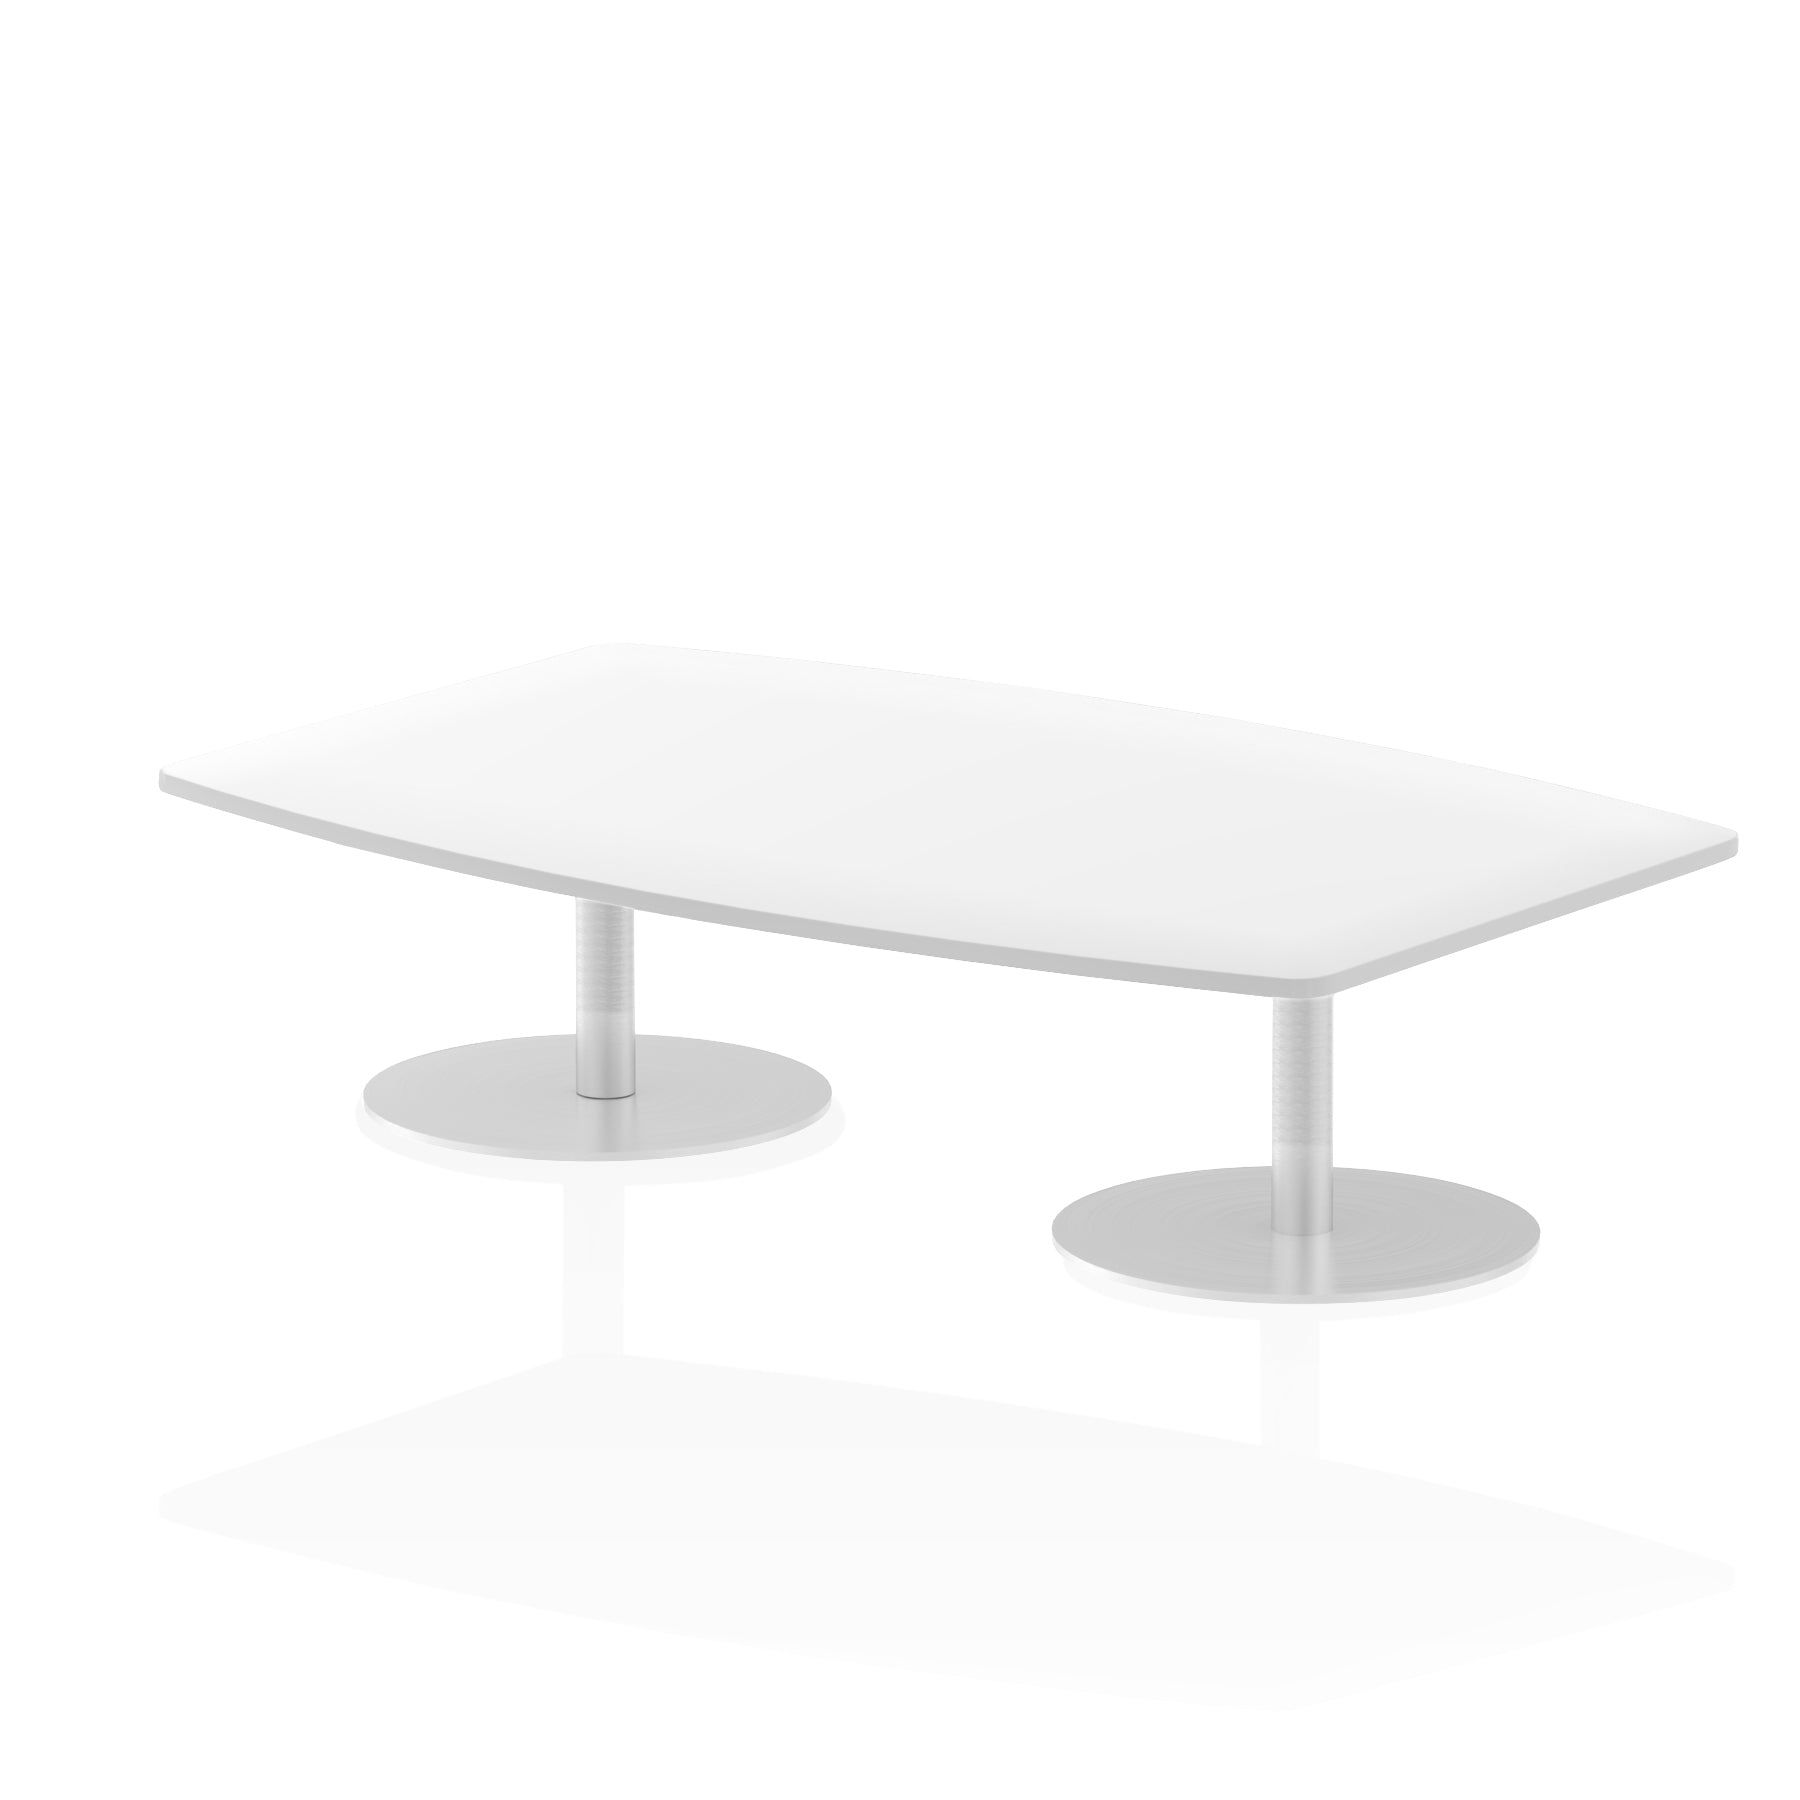 Hi-Gloss Italia High Gloss Boardroom Table - Self-Assembly, MFC Barrel Shape, 1800x1200 or 2400x1200, Silver Bistro Legs